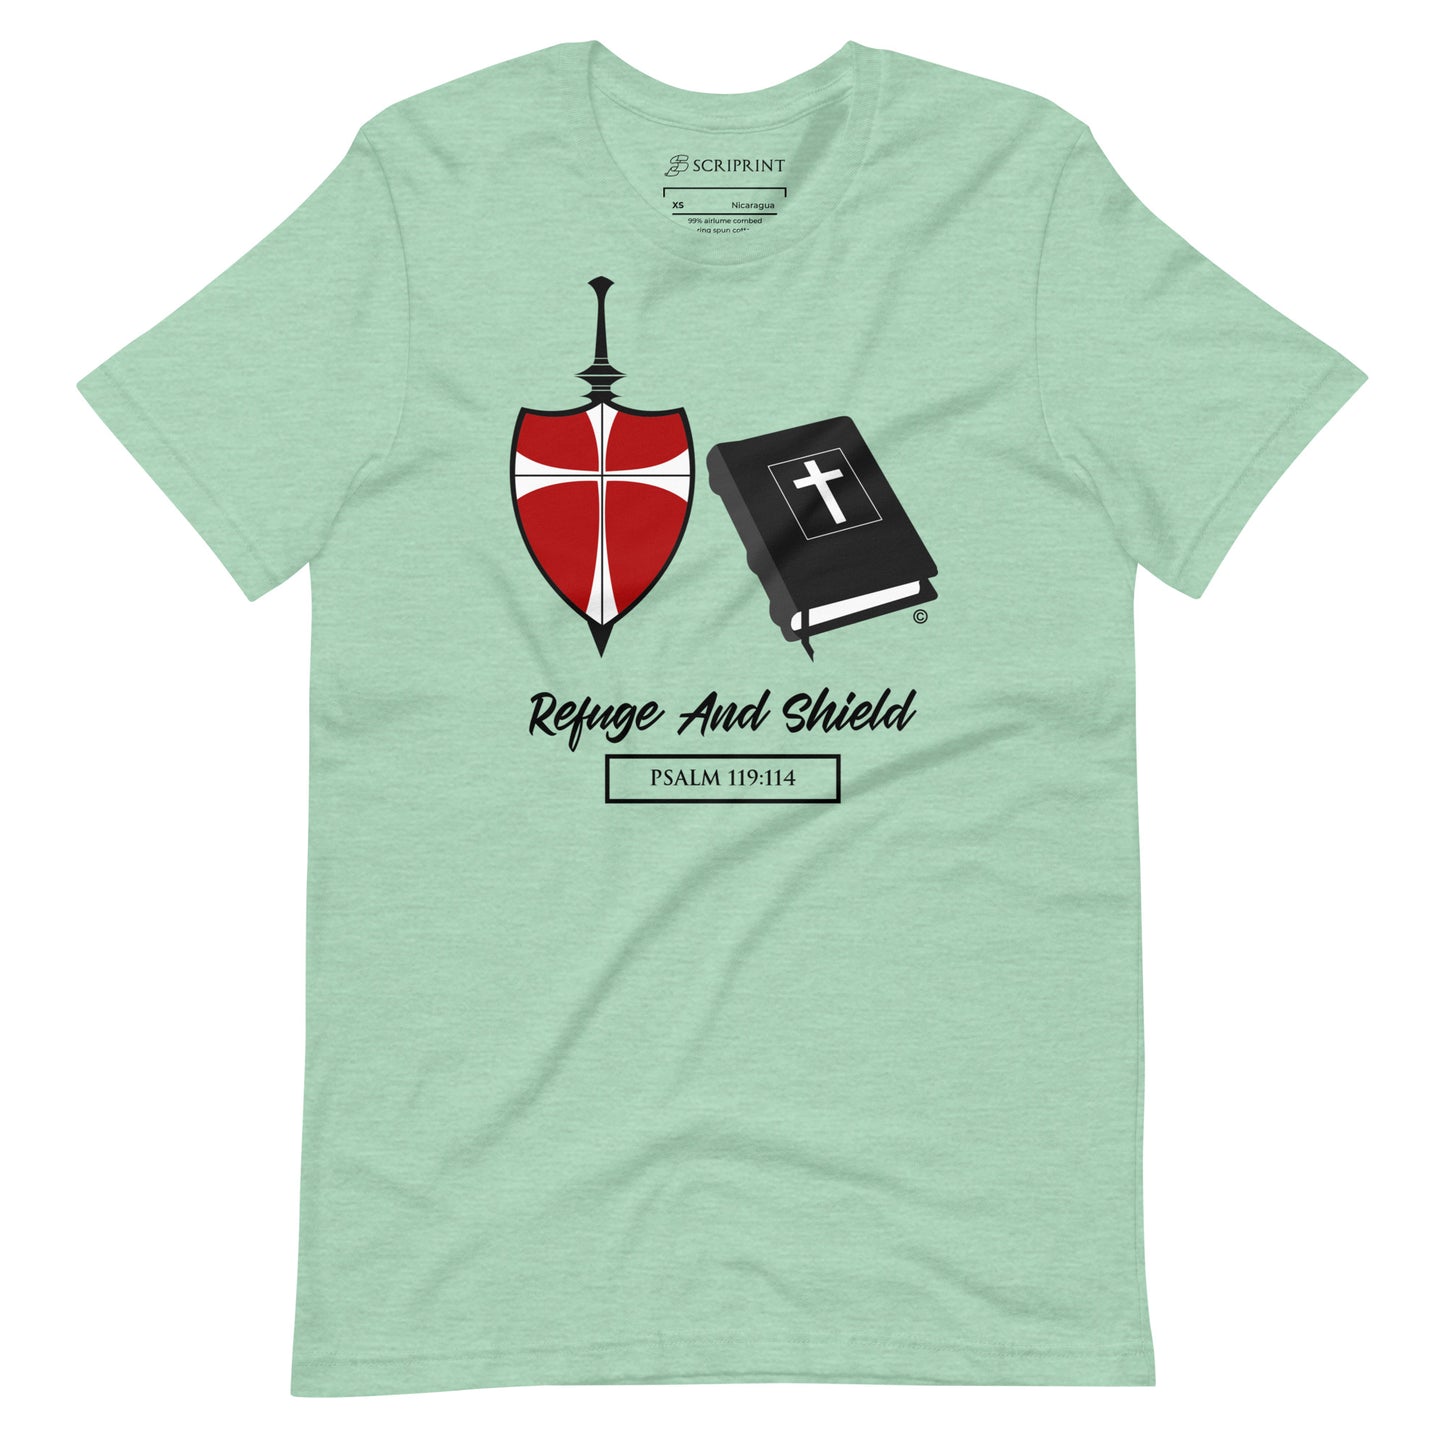 Refuge and Shield Women's T-Shirt